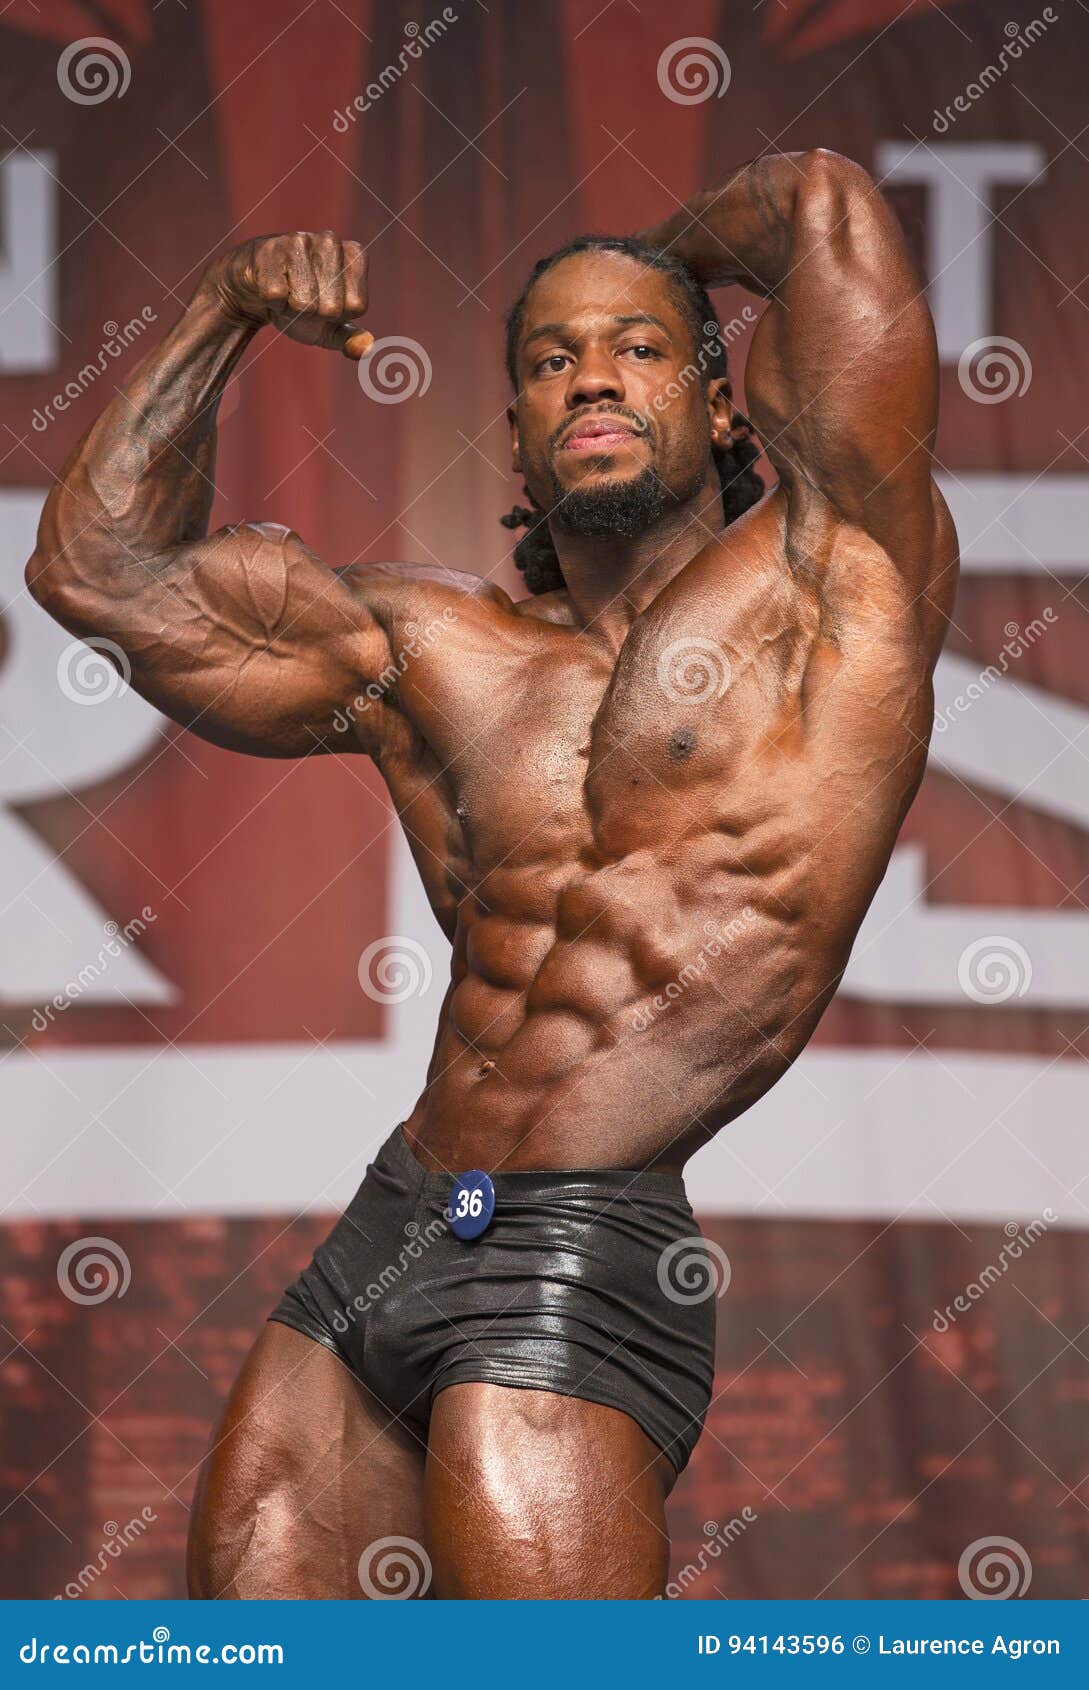 Amazon.com: FIED IFBB NPC ElitePro Classic Physique Posing Trunks LOW ver.  bodybuilding contest stage shorts black (LOW, 28